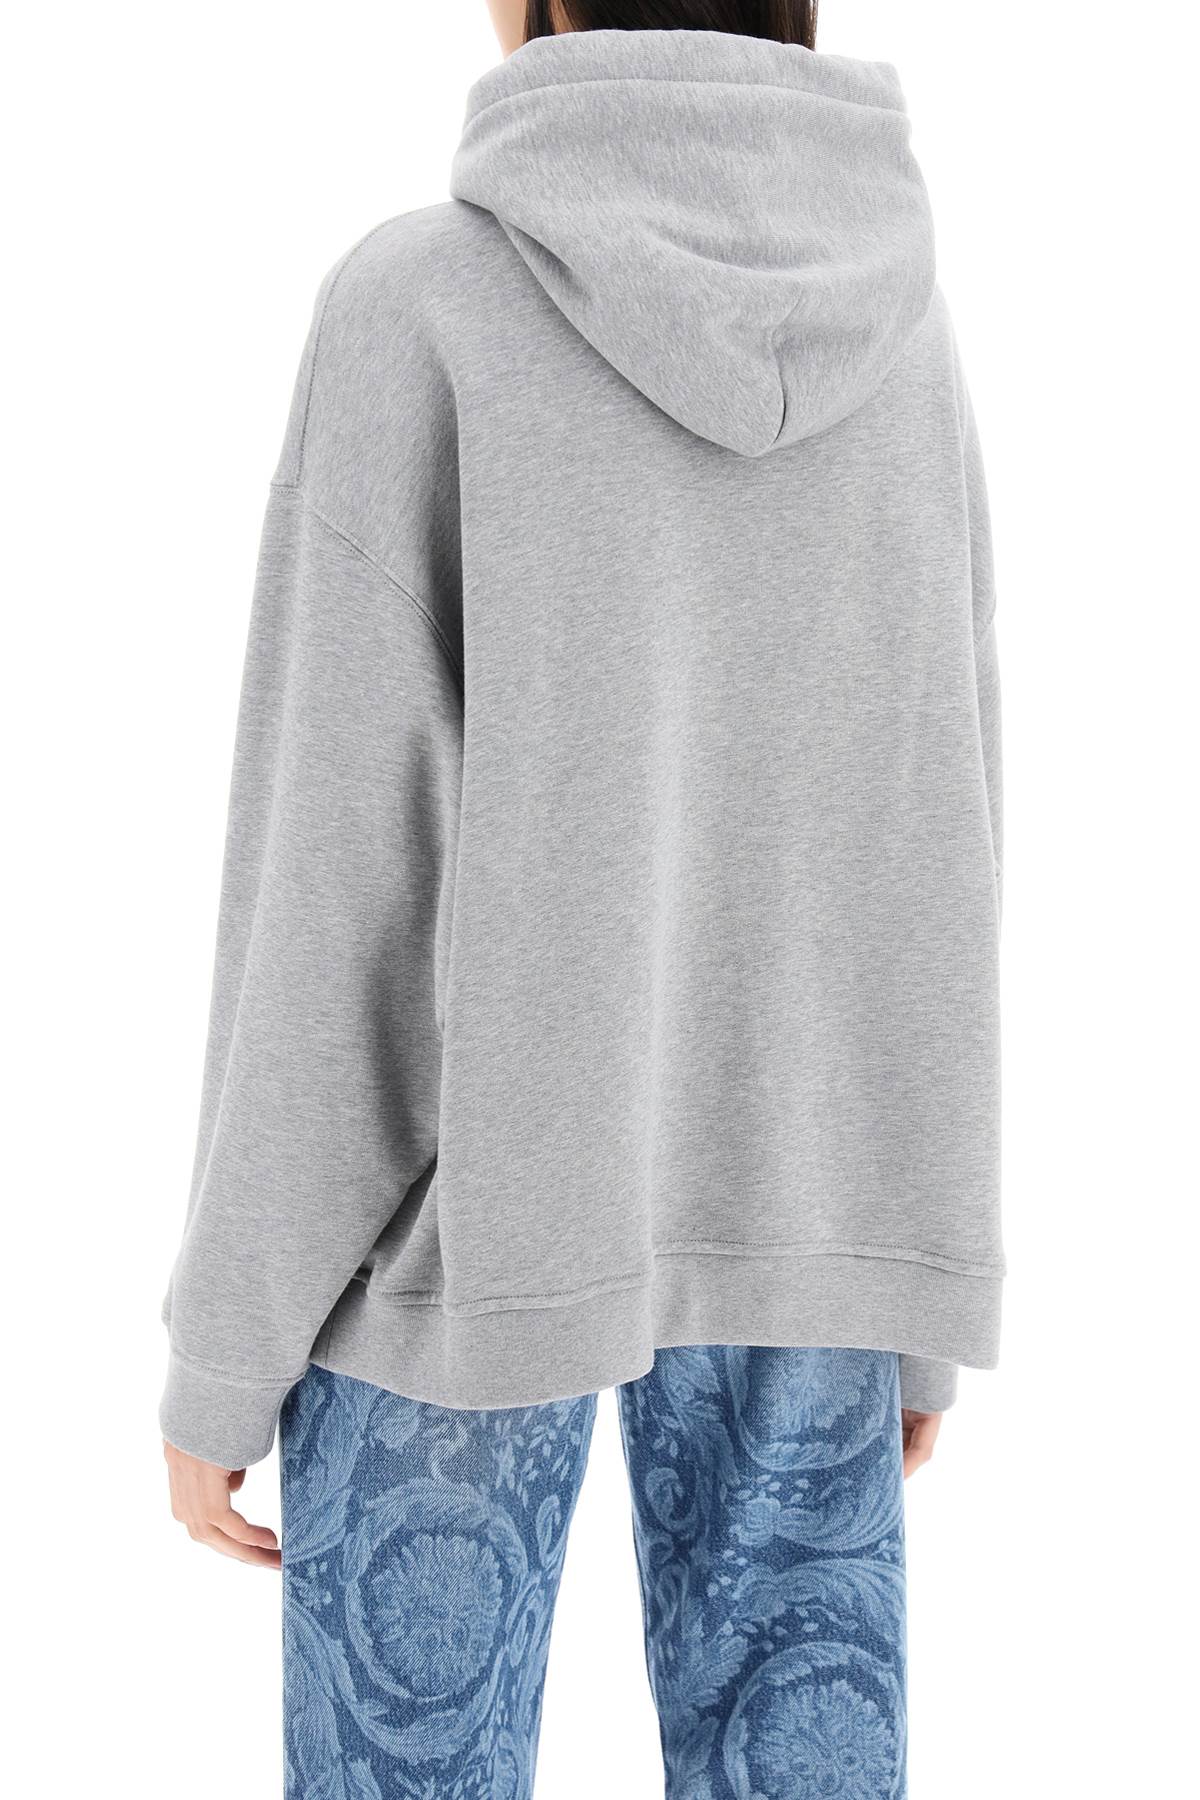 VERSACE Versatile Gray Hooded Sweatshirt for Women - SS24 Collection